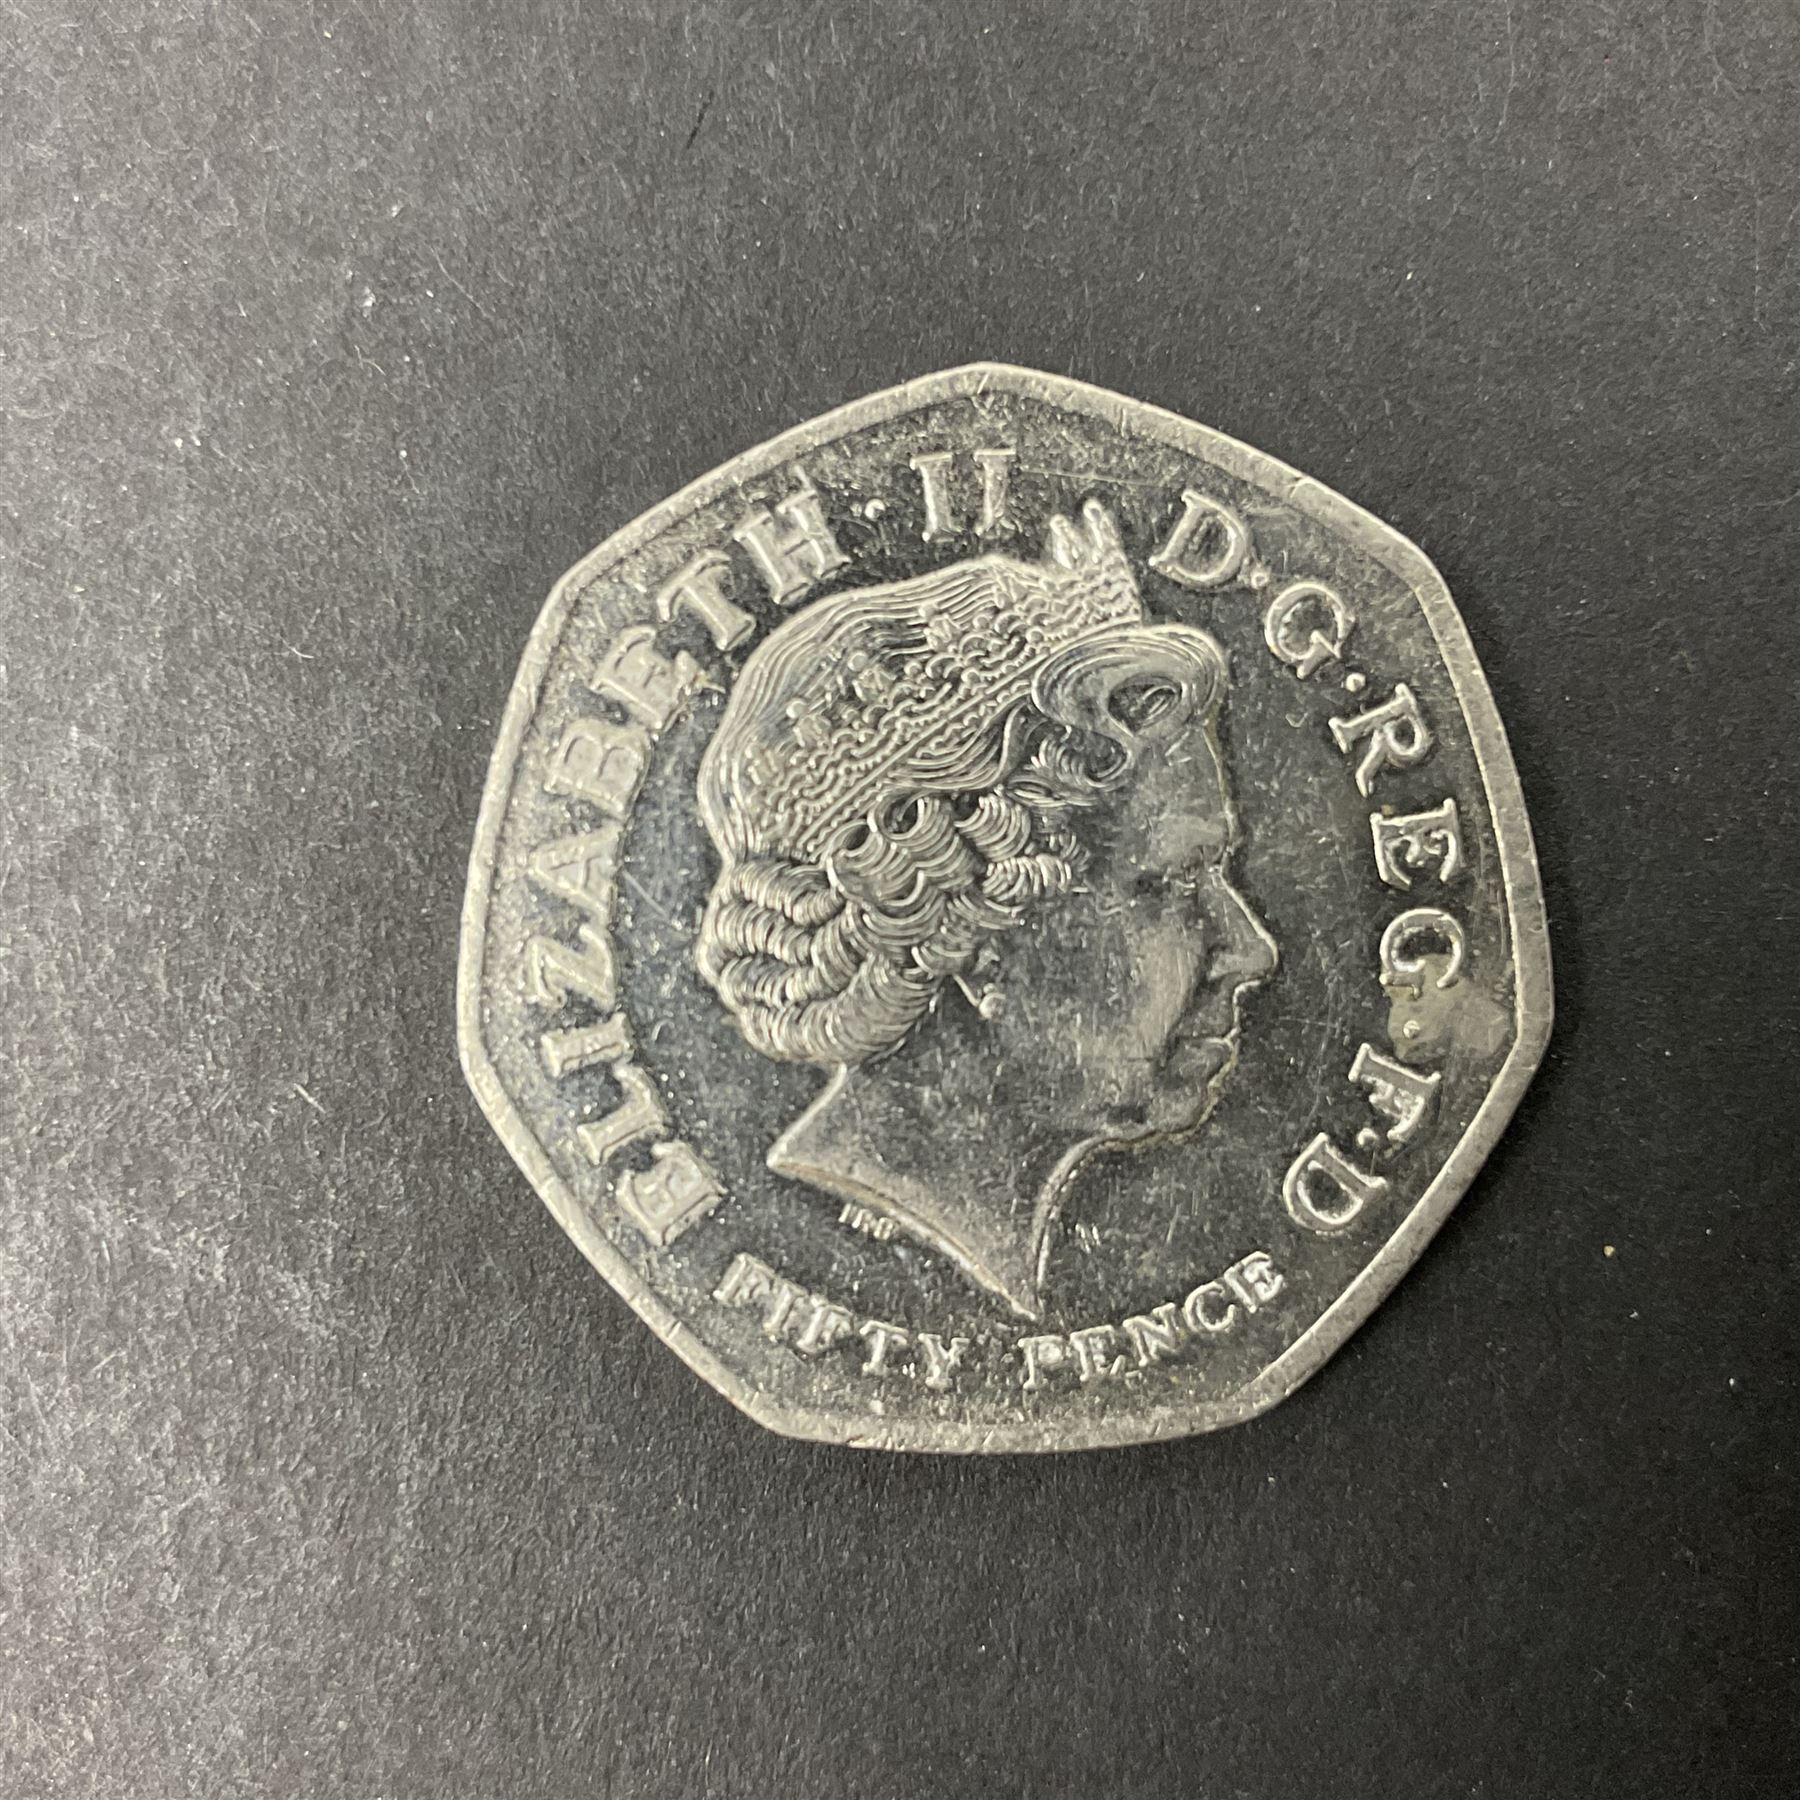 Queen Elizabeth II United Kingdom 2009 Kew Gardens fifty pence coin - Image 3 of 3